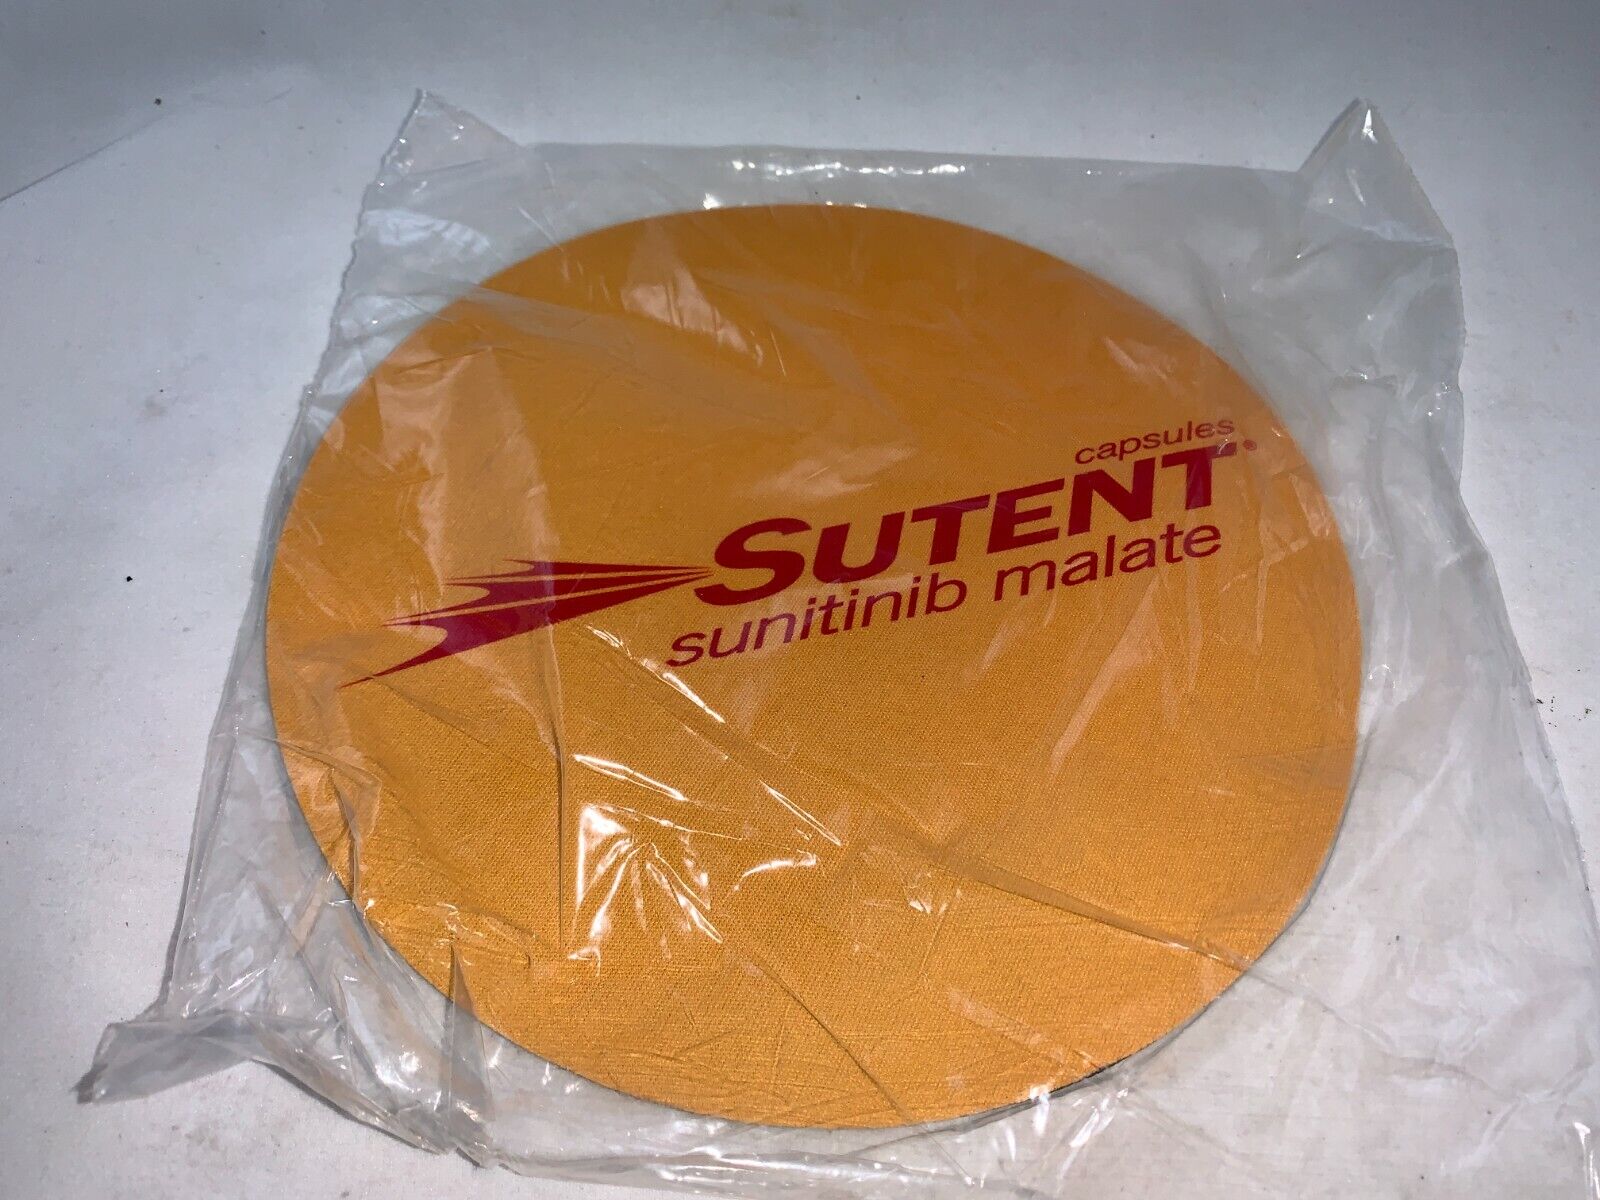 Vintage Lot of 25 Medicine Branded Sutent Sunitinib Malate Capsule Mouse Pads 